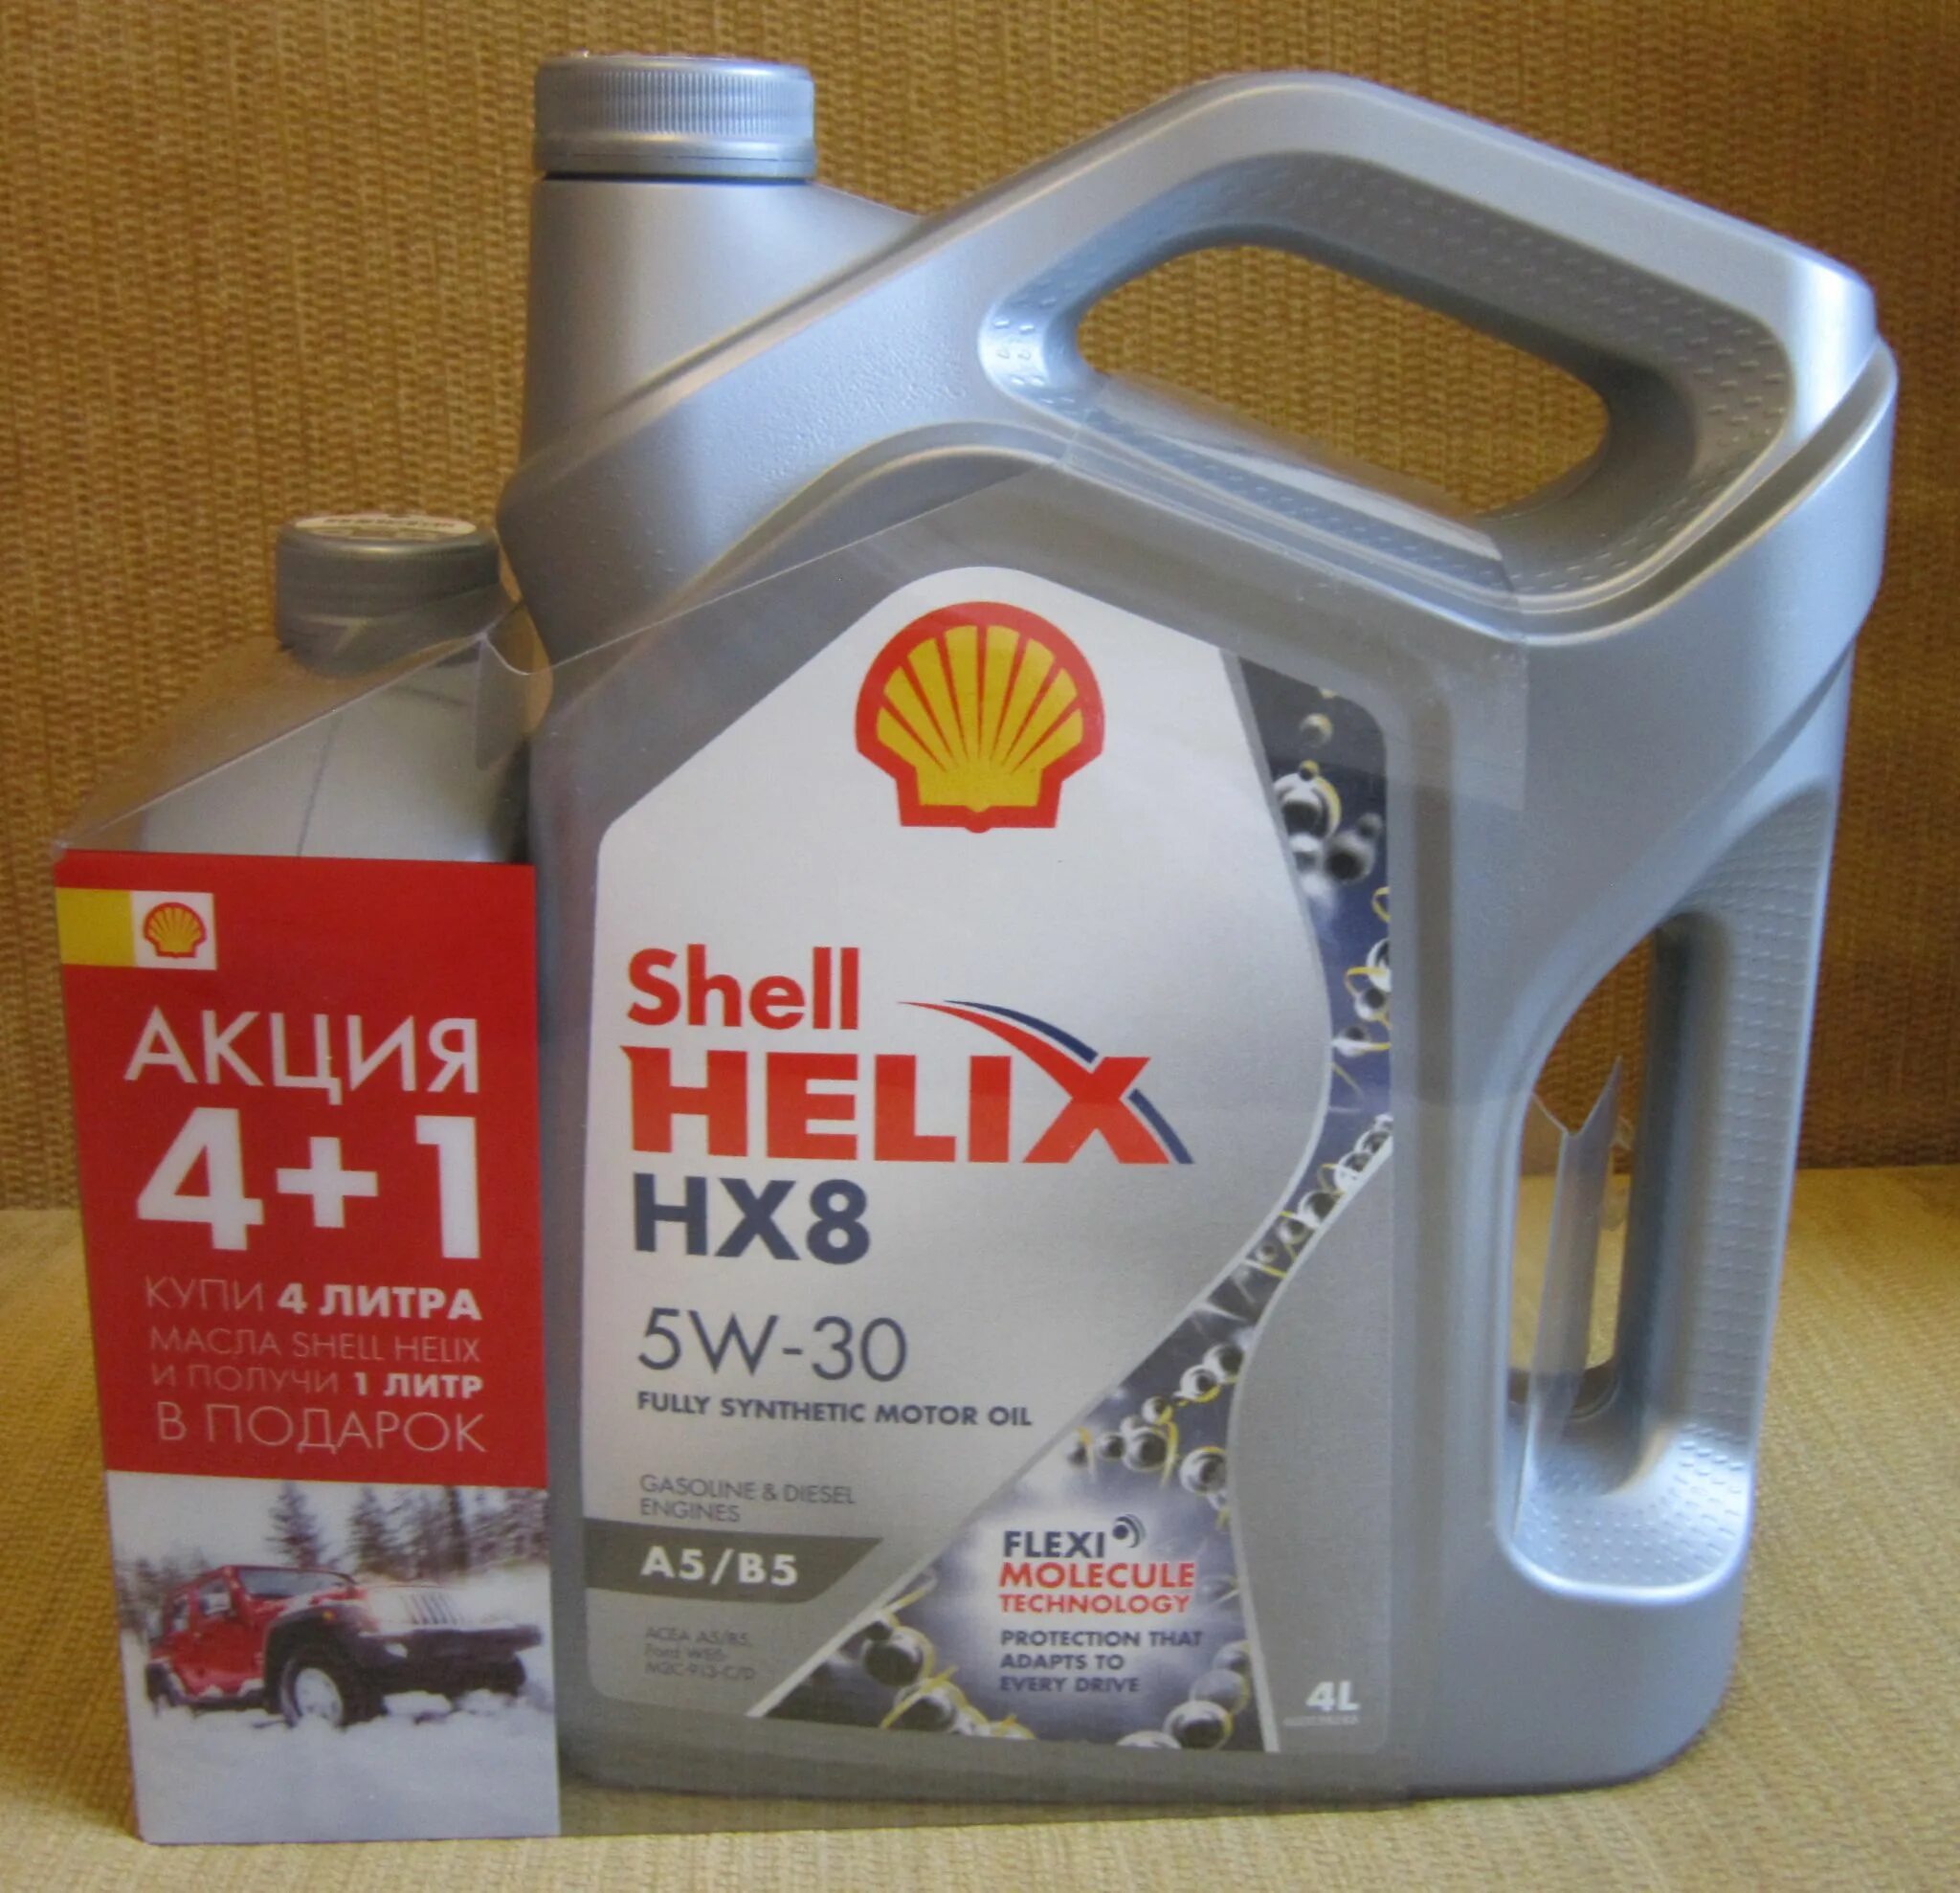 Shell hx8 5w30. Shell hx8 5w30 a5/b5. Моторное масло синтетическое Shell Helix hx8 a5/b5 5w-30. Моторное масло Shell Helix hx8 a5/b5 5w-30 синтетическое 4 л. Масло shell 8